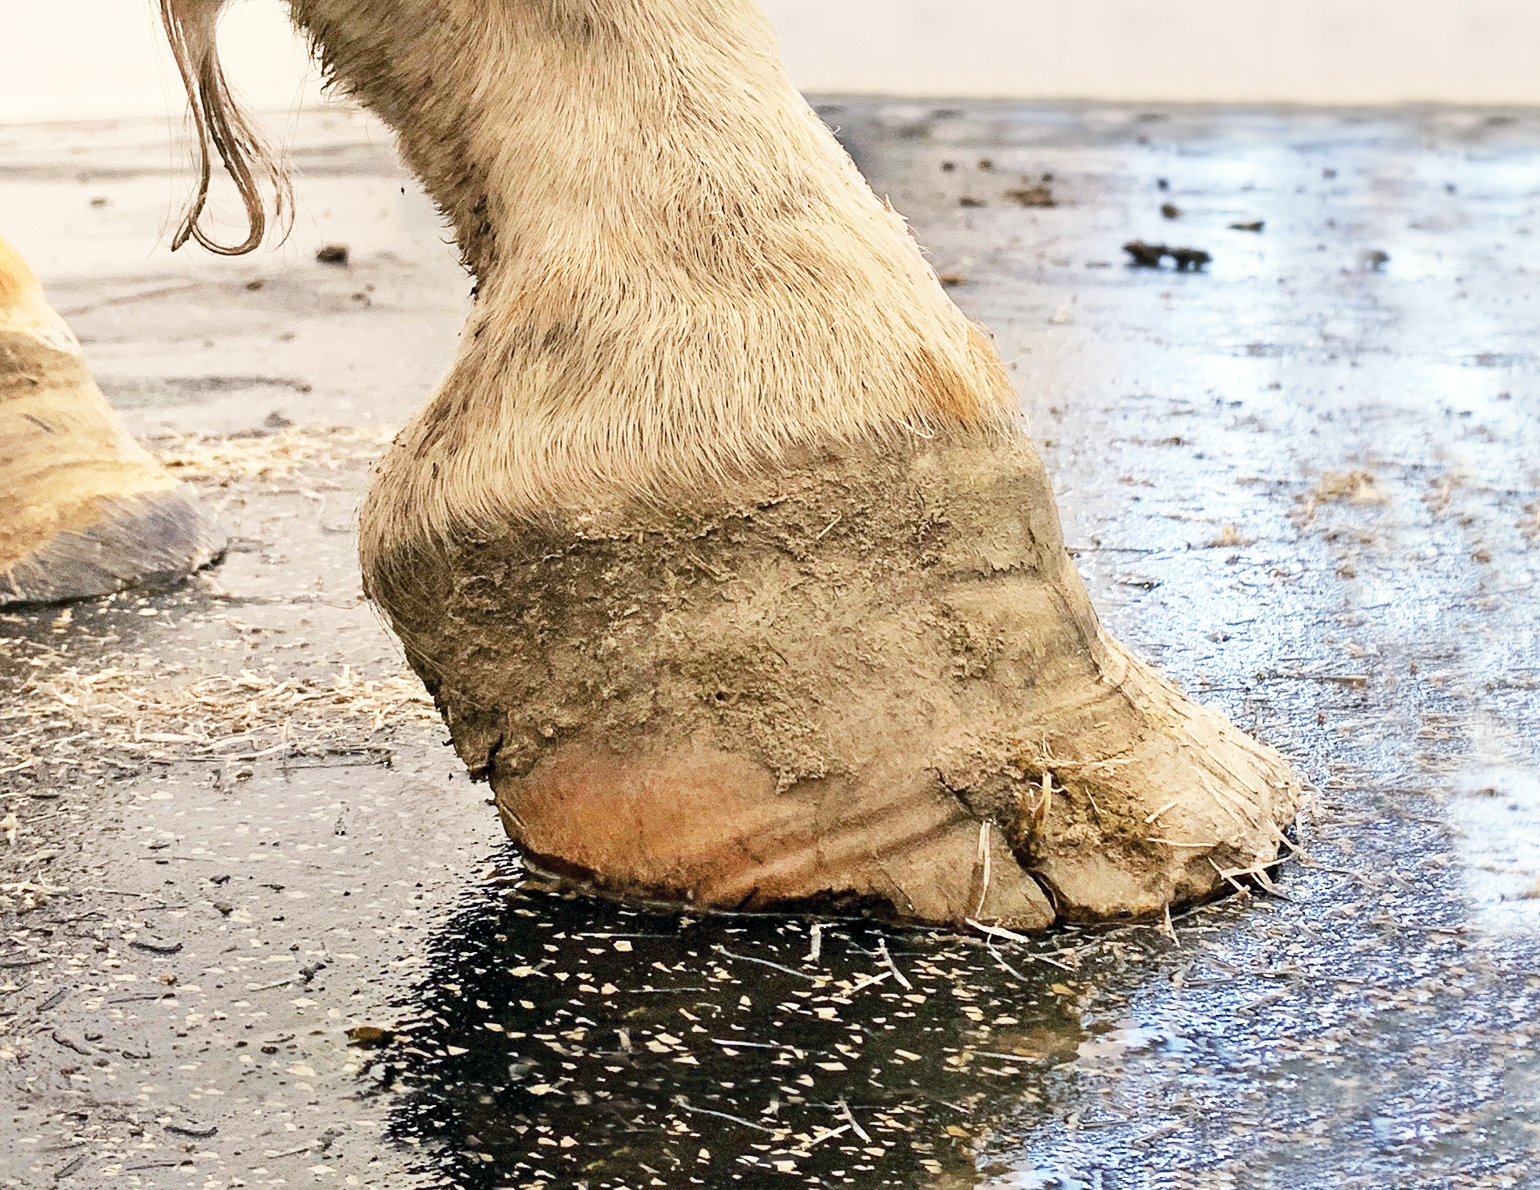 Clip-on shoes let horses clip-clop in comfort